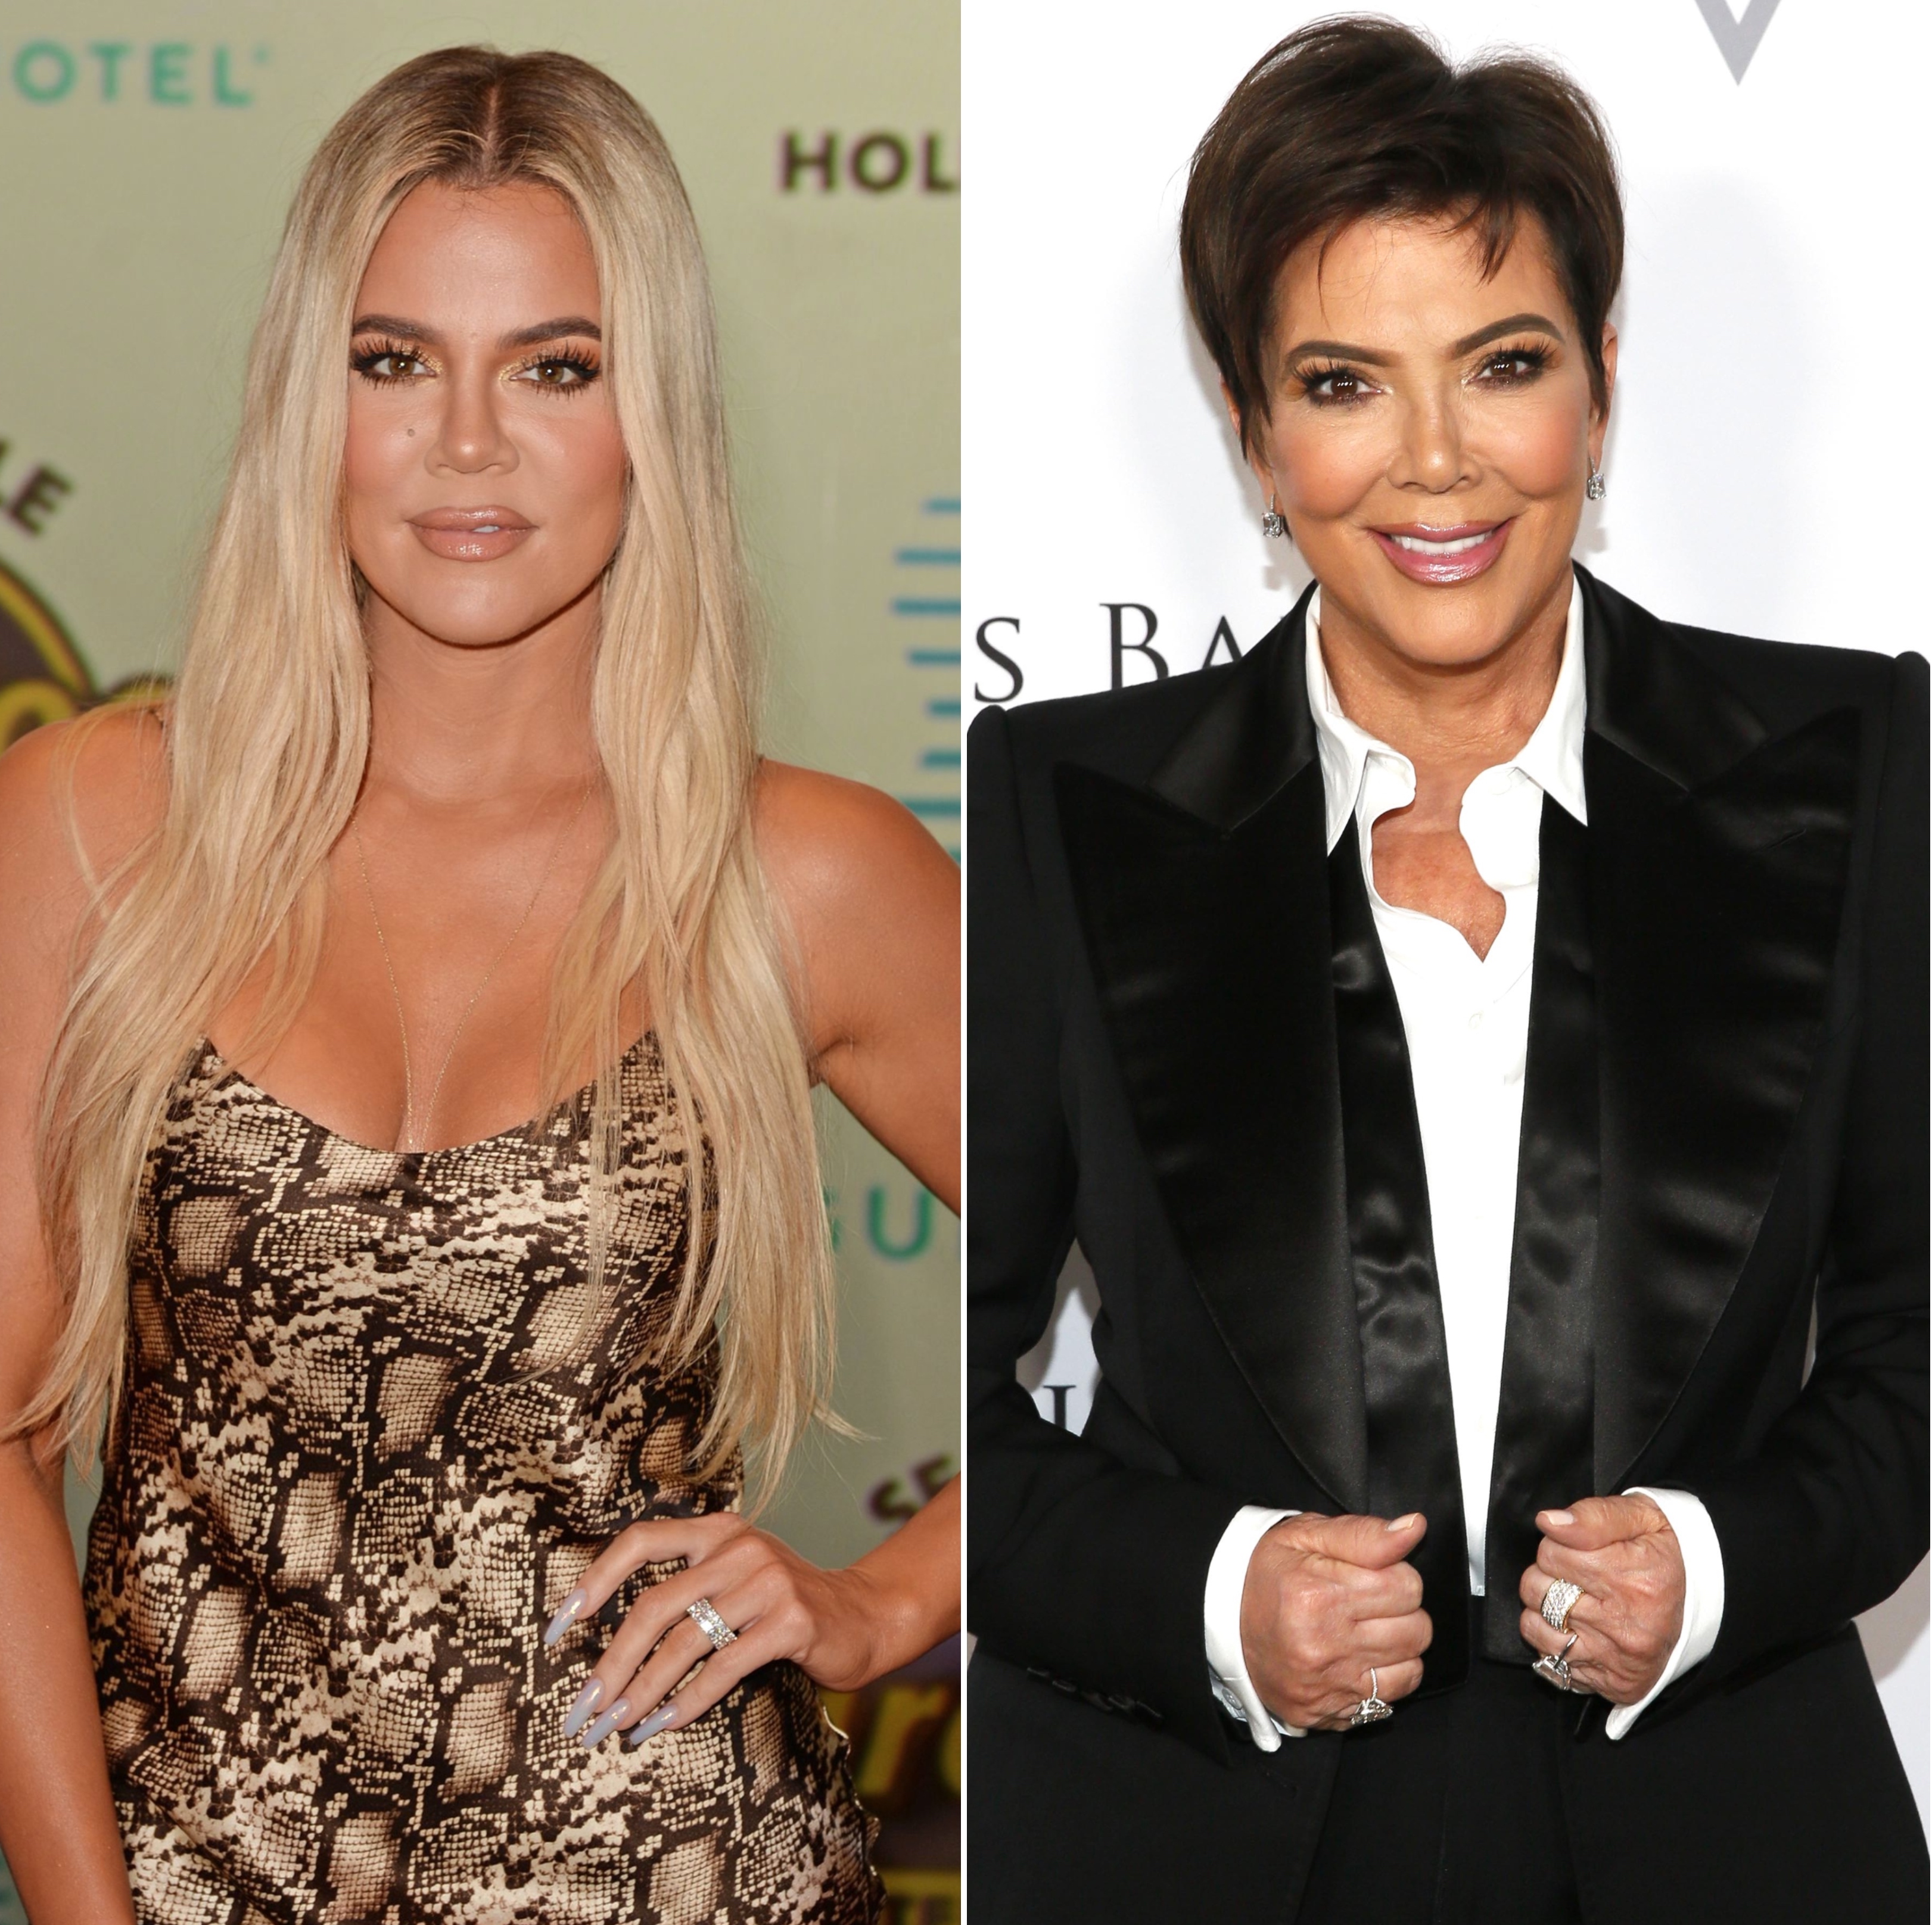 Celebrity Sex Stories Khloe Kardashian, Kris Jenner, More image pic